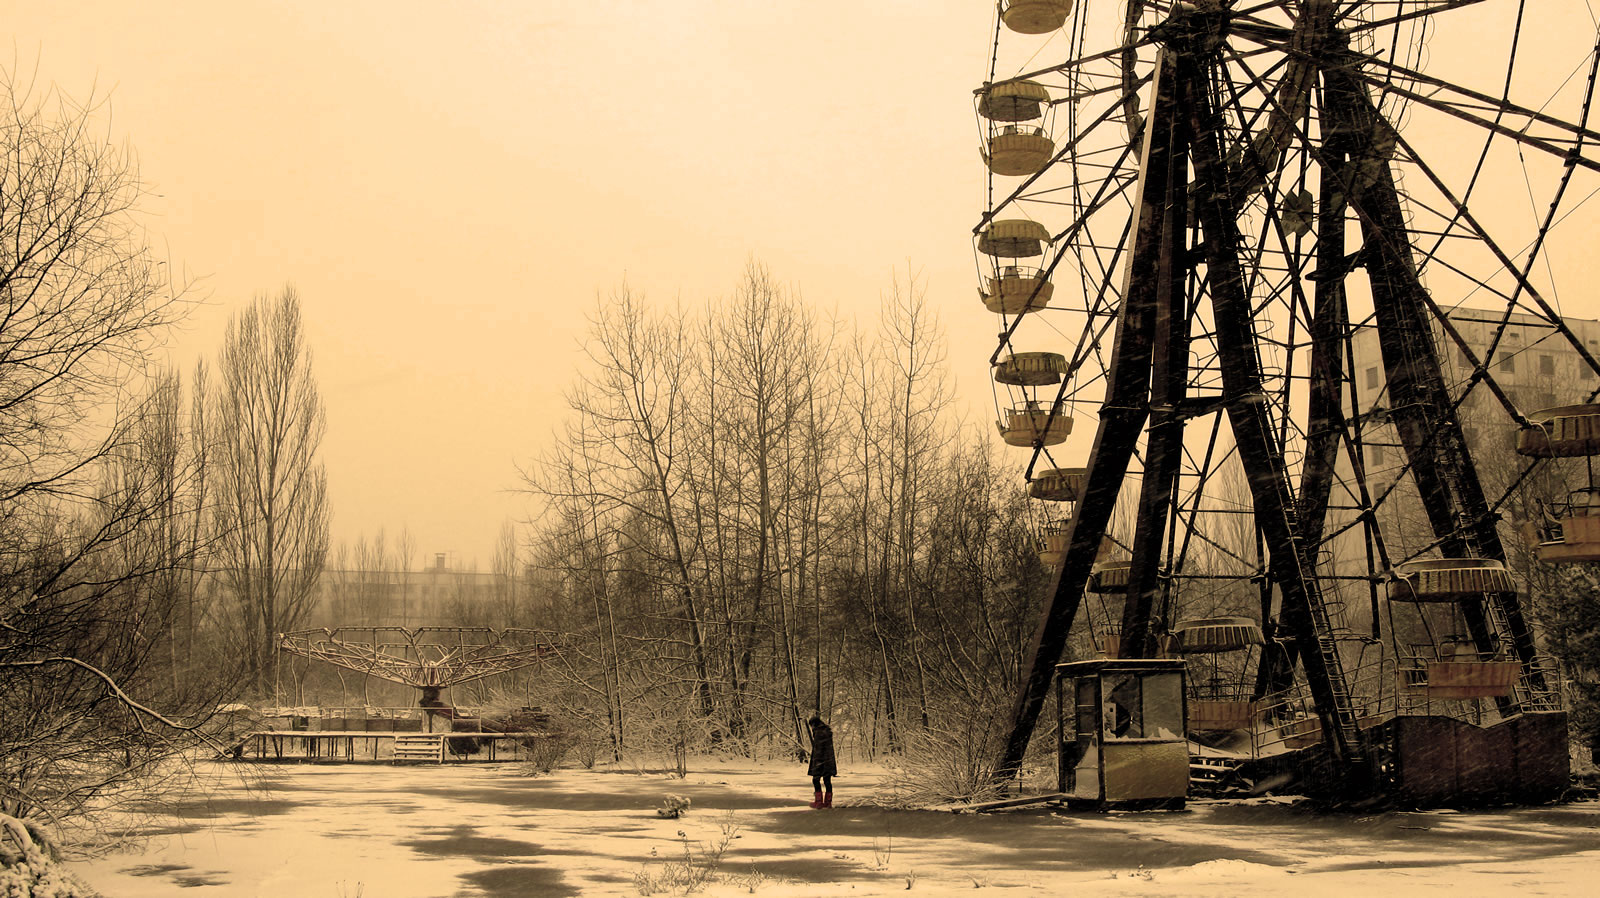 chernobyl, man made, ferris wheel